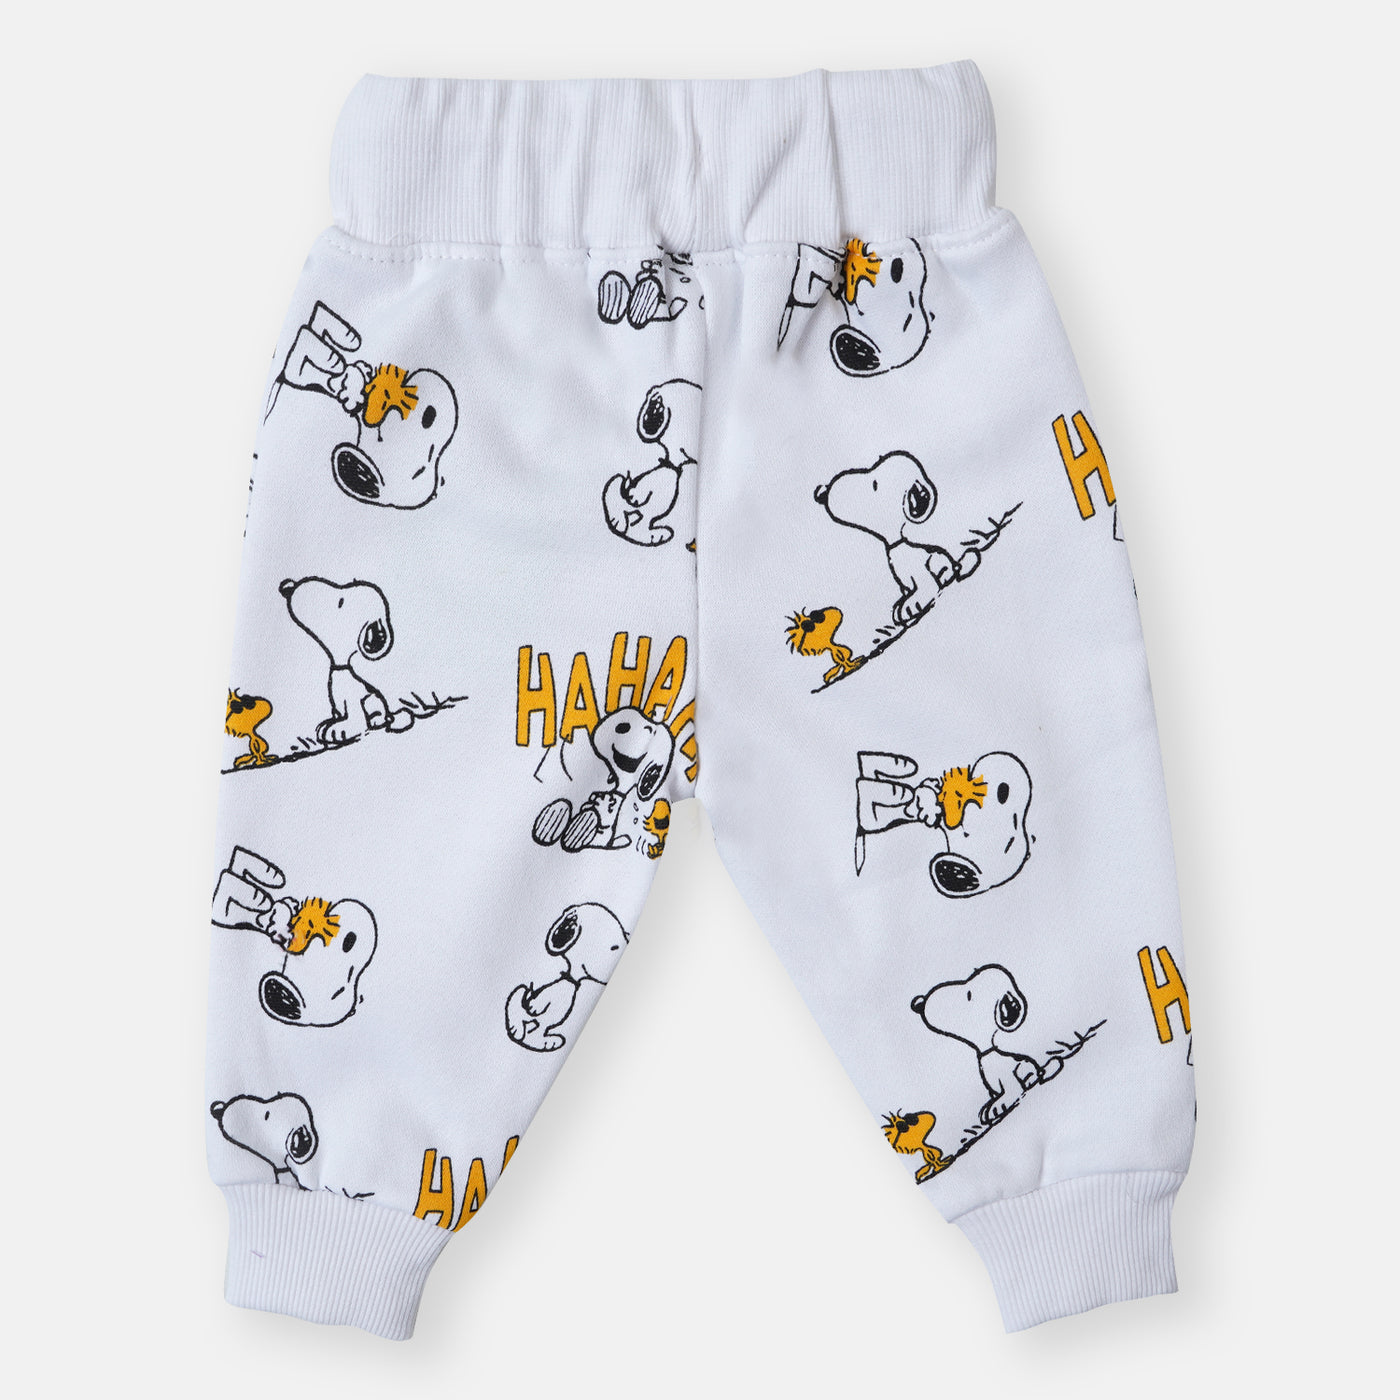 infant Boys Pyjama Haha - White